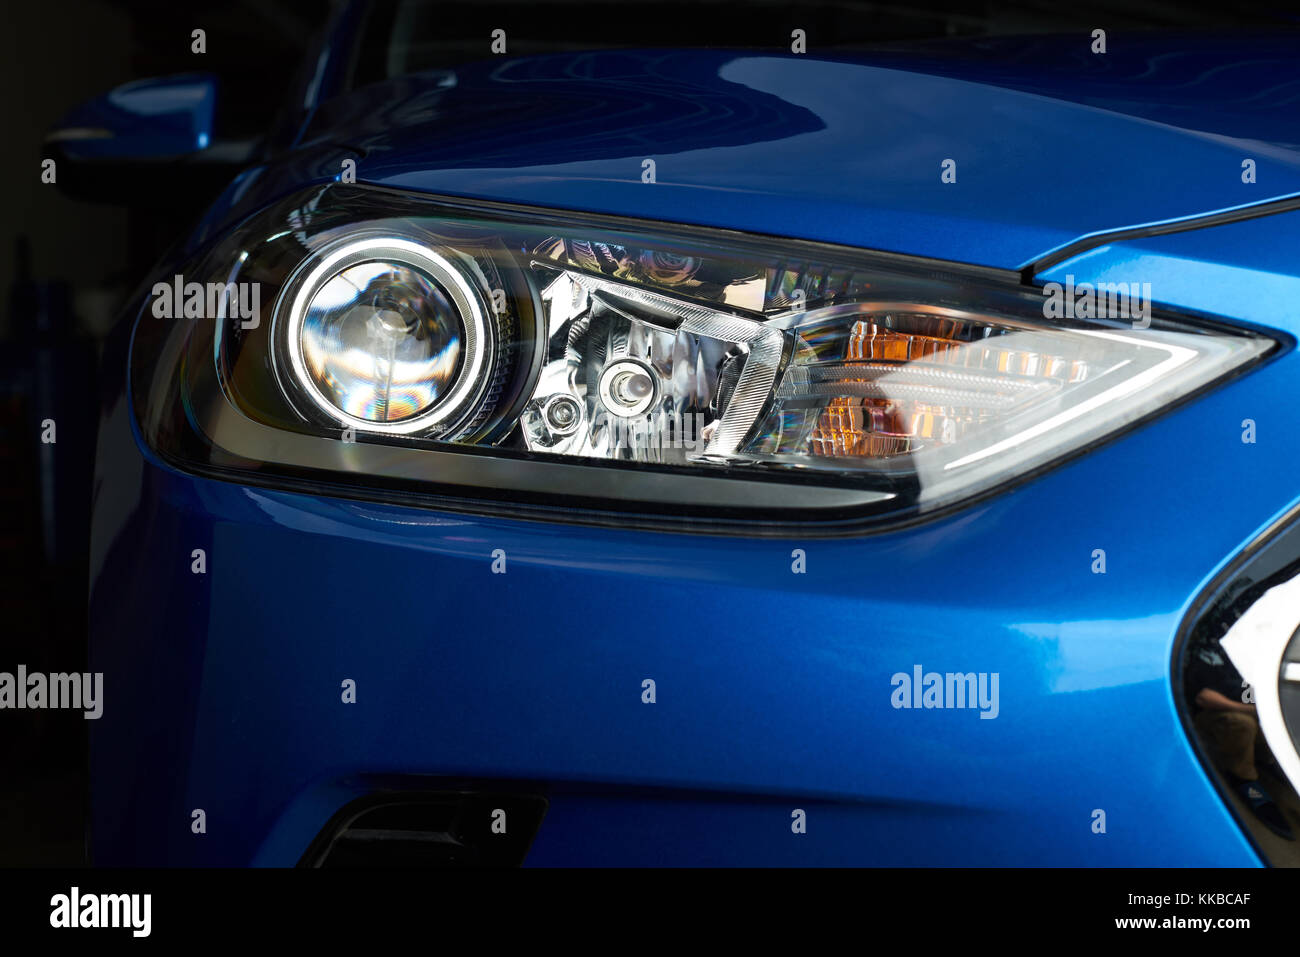 Lamps in car headlight close-up. Clean new car headlight Stock Photo